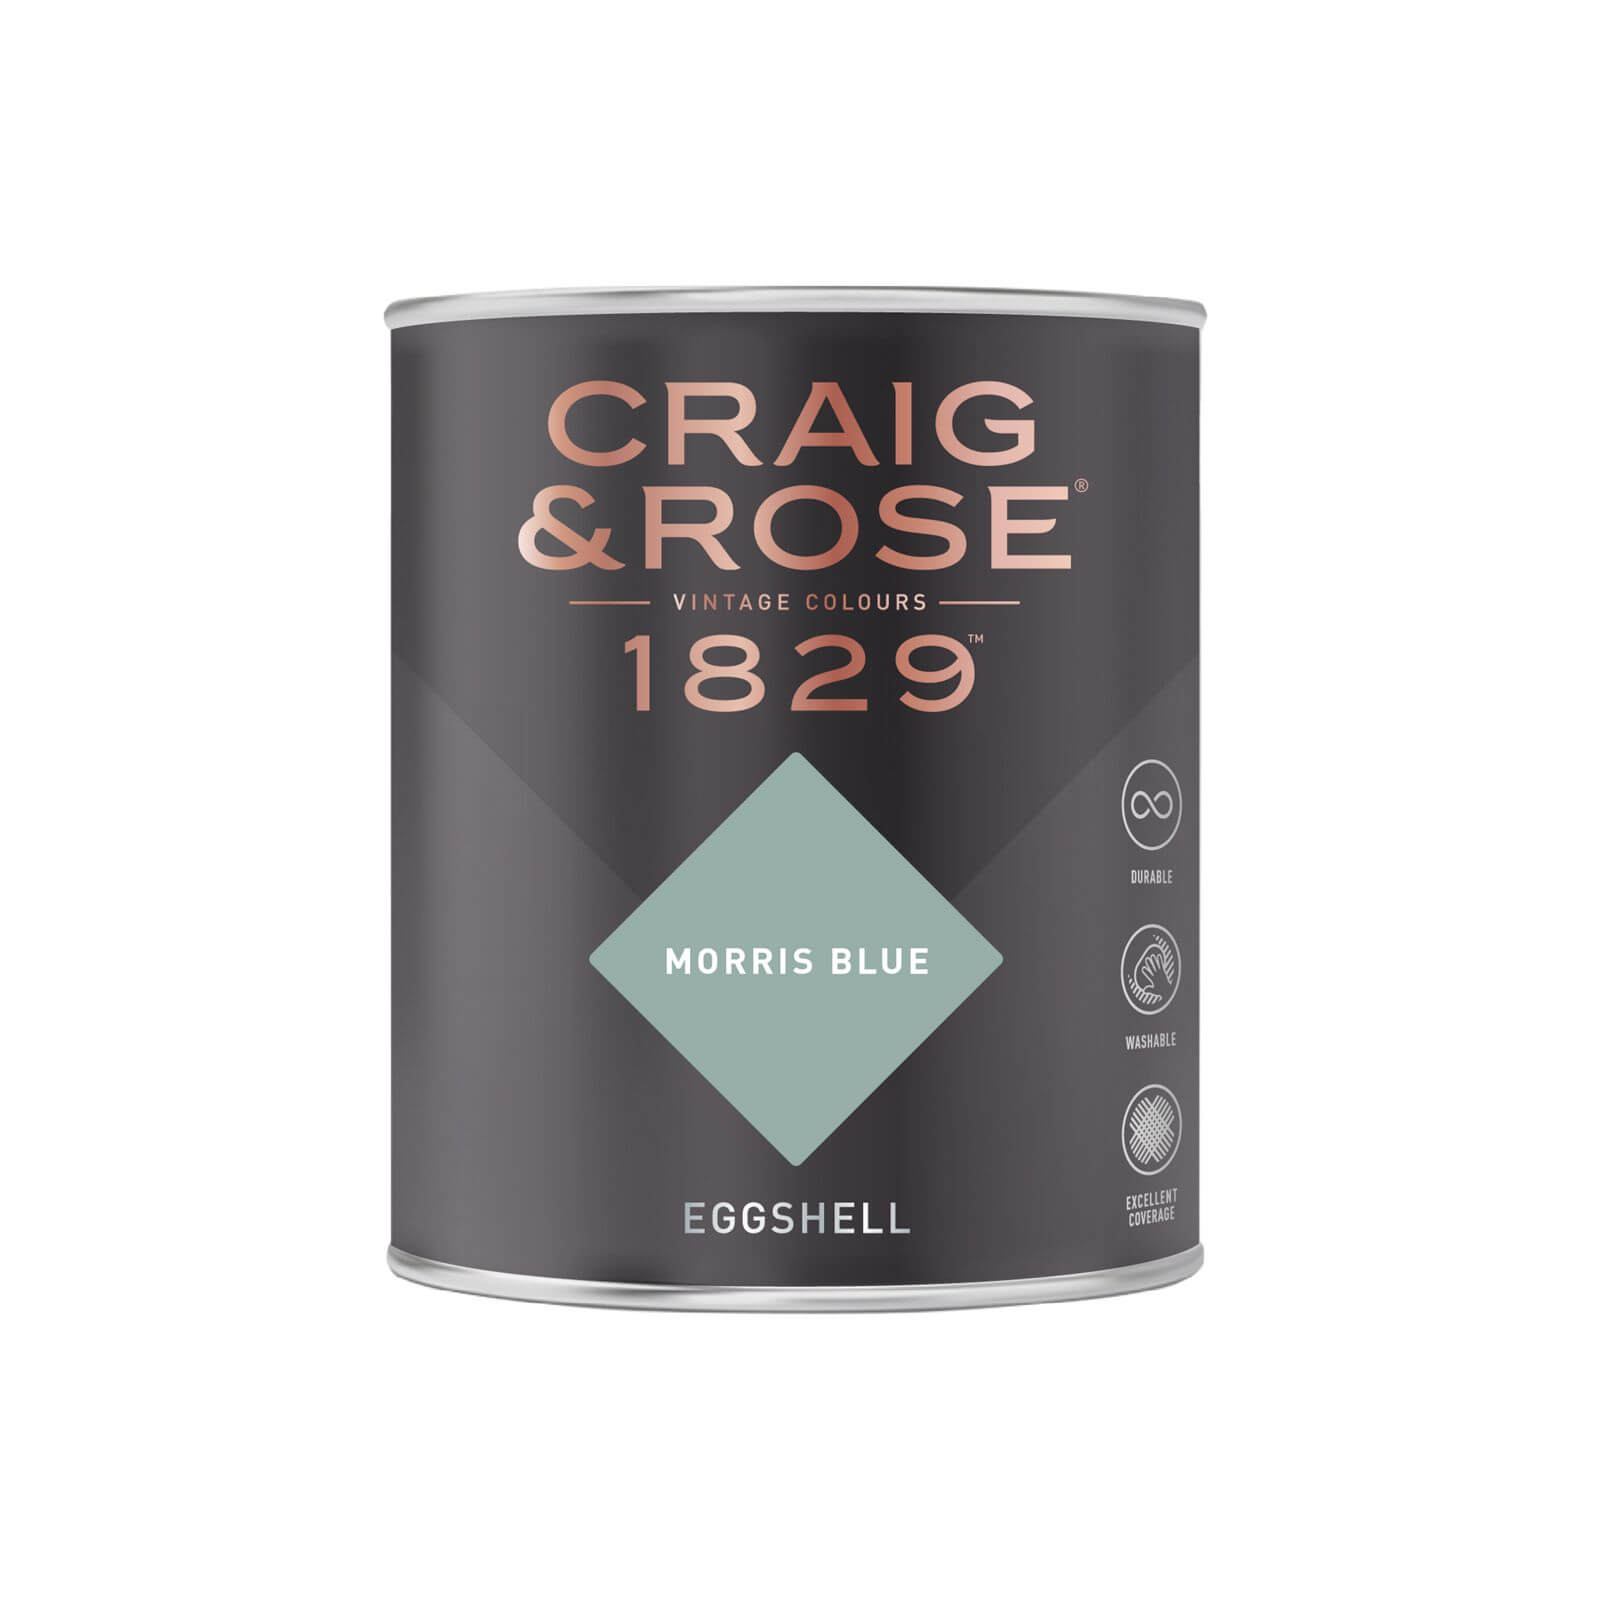 Craig & Rose 1829 Eggshell Paint Morris Blue - 750ml